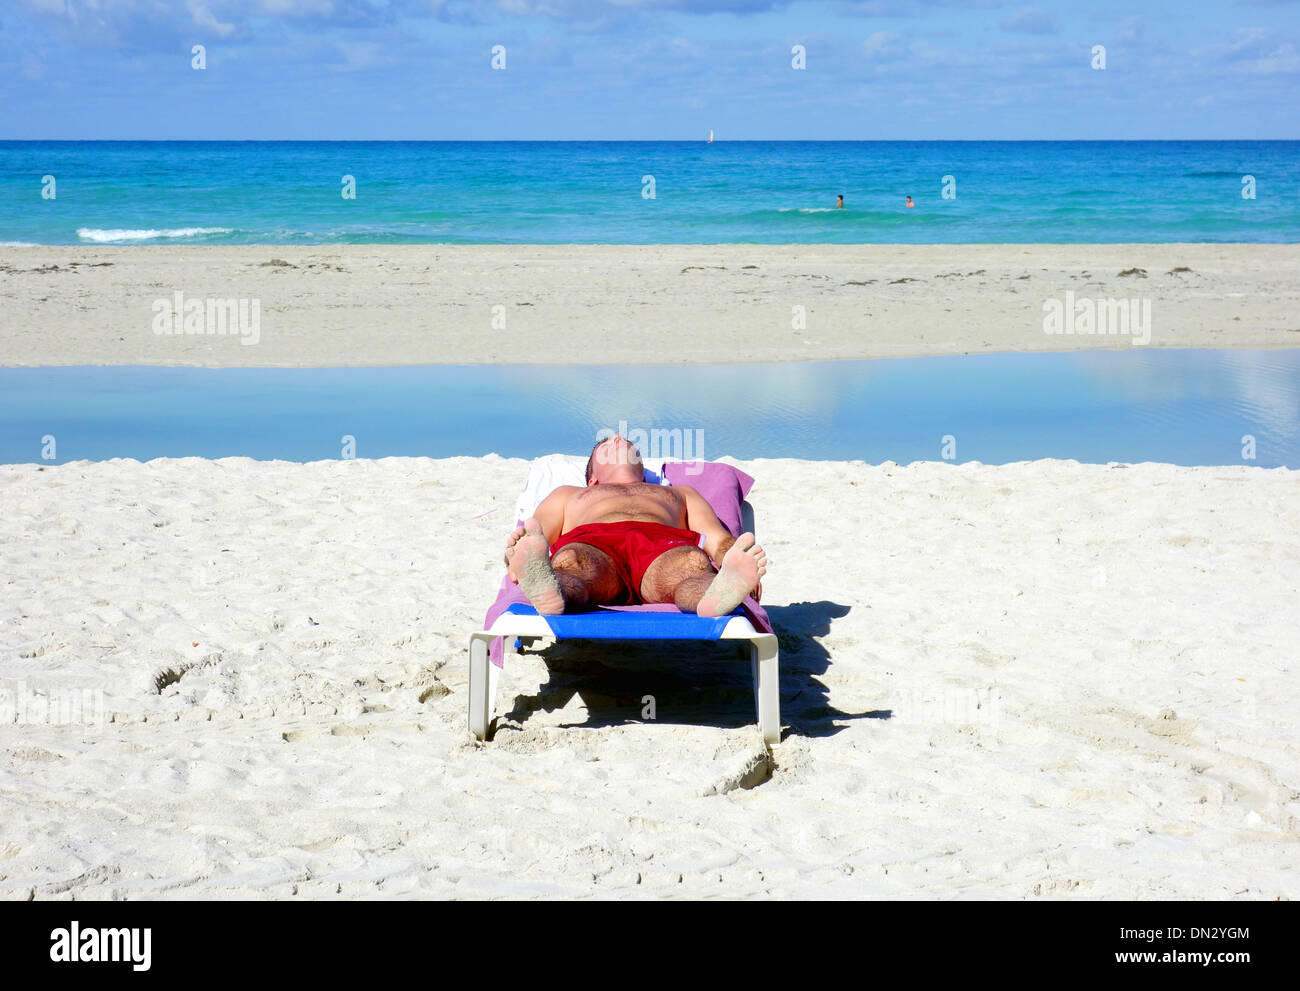 Man sunbathing on a beach in Varadero, Cuba Stock Photo